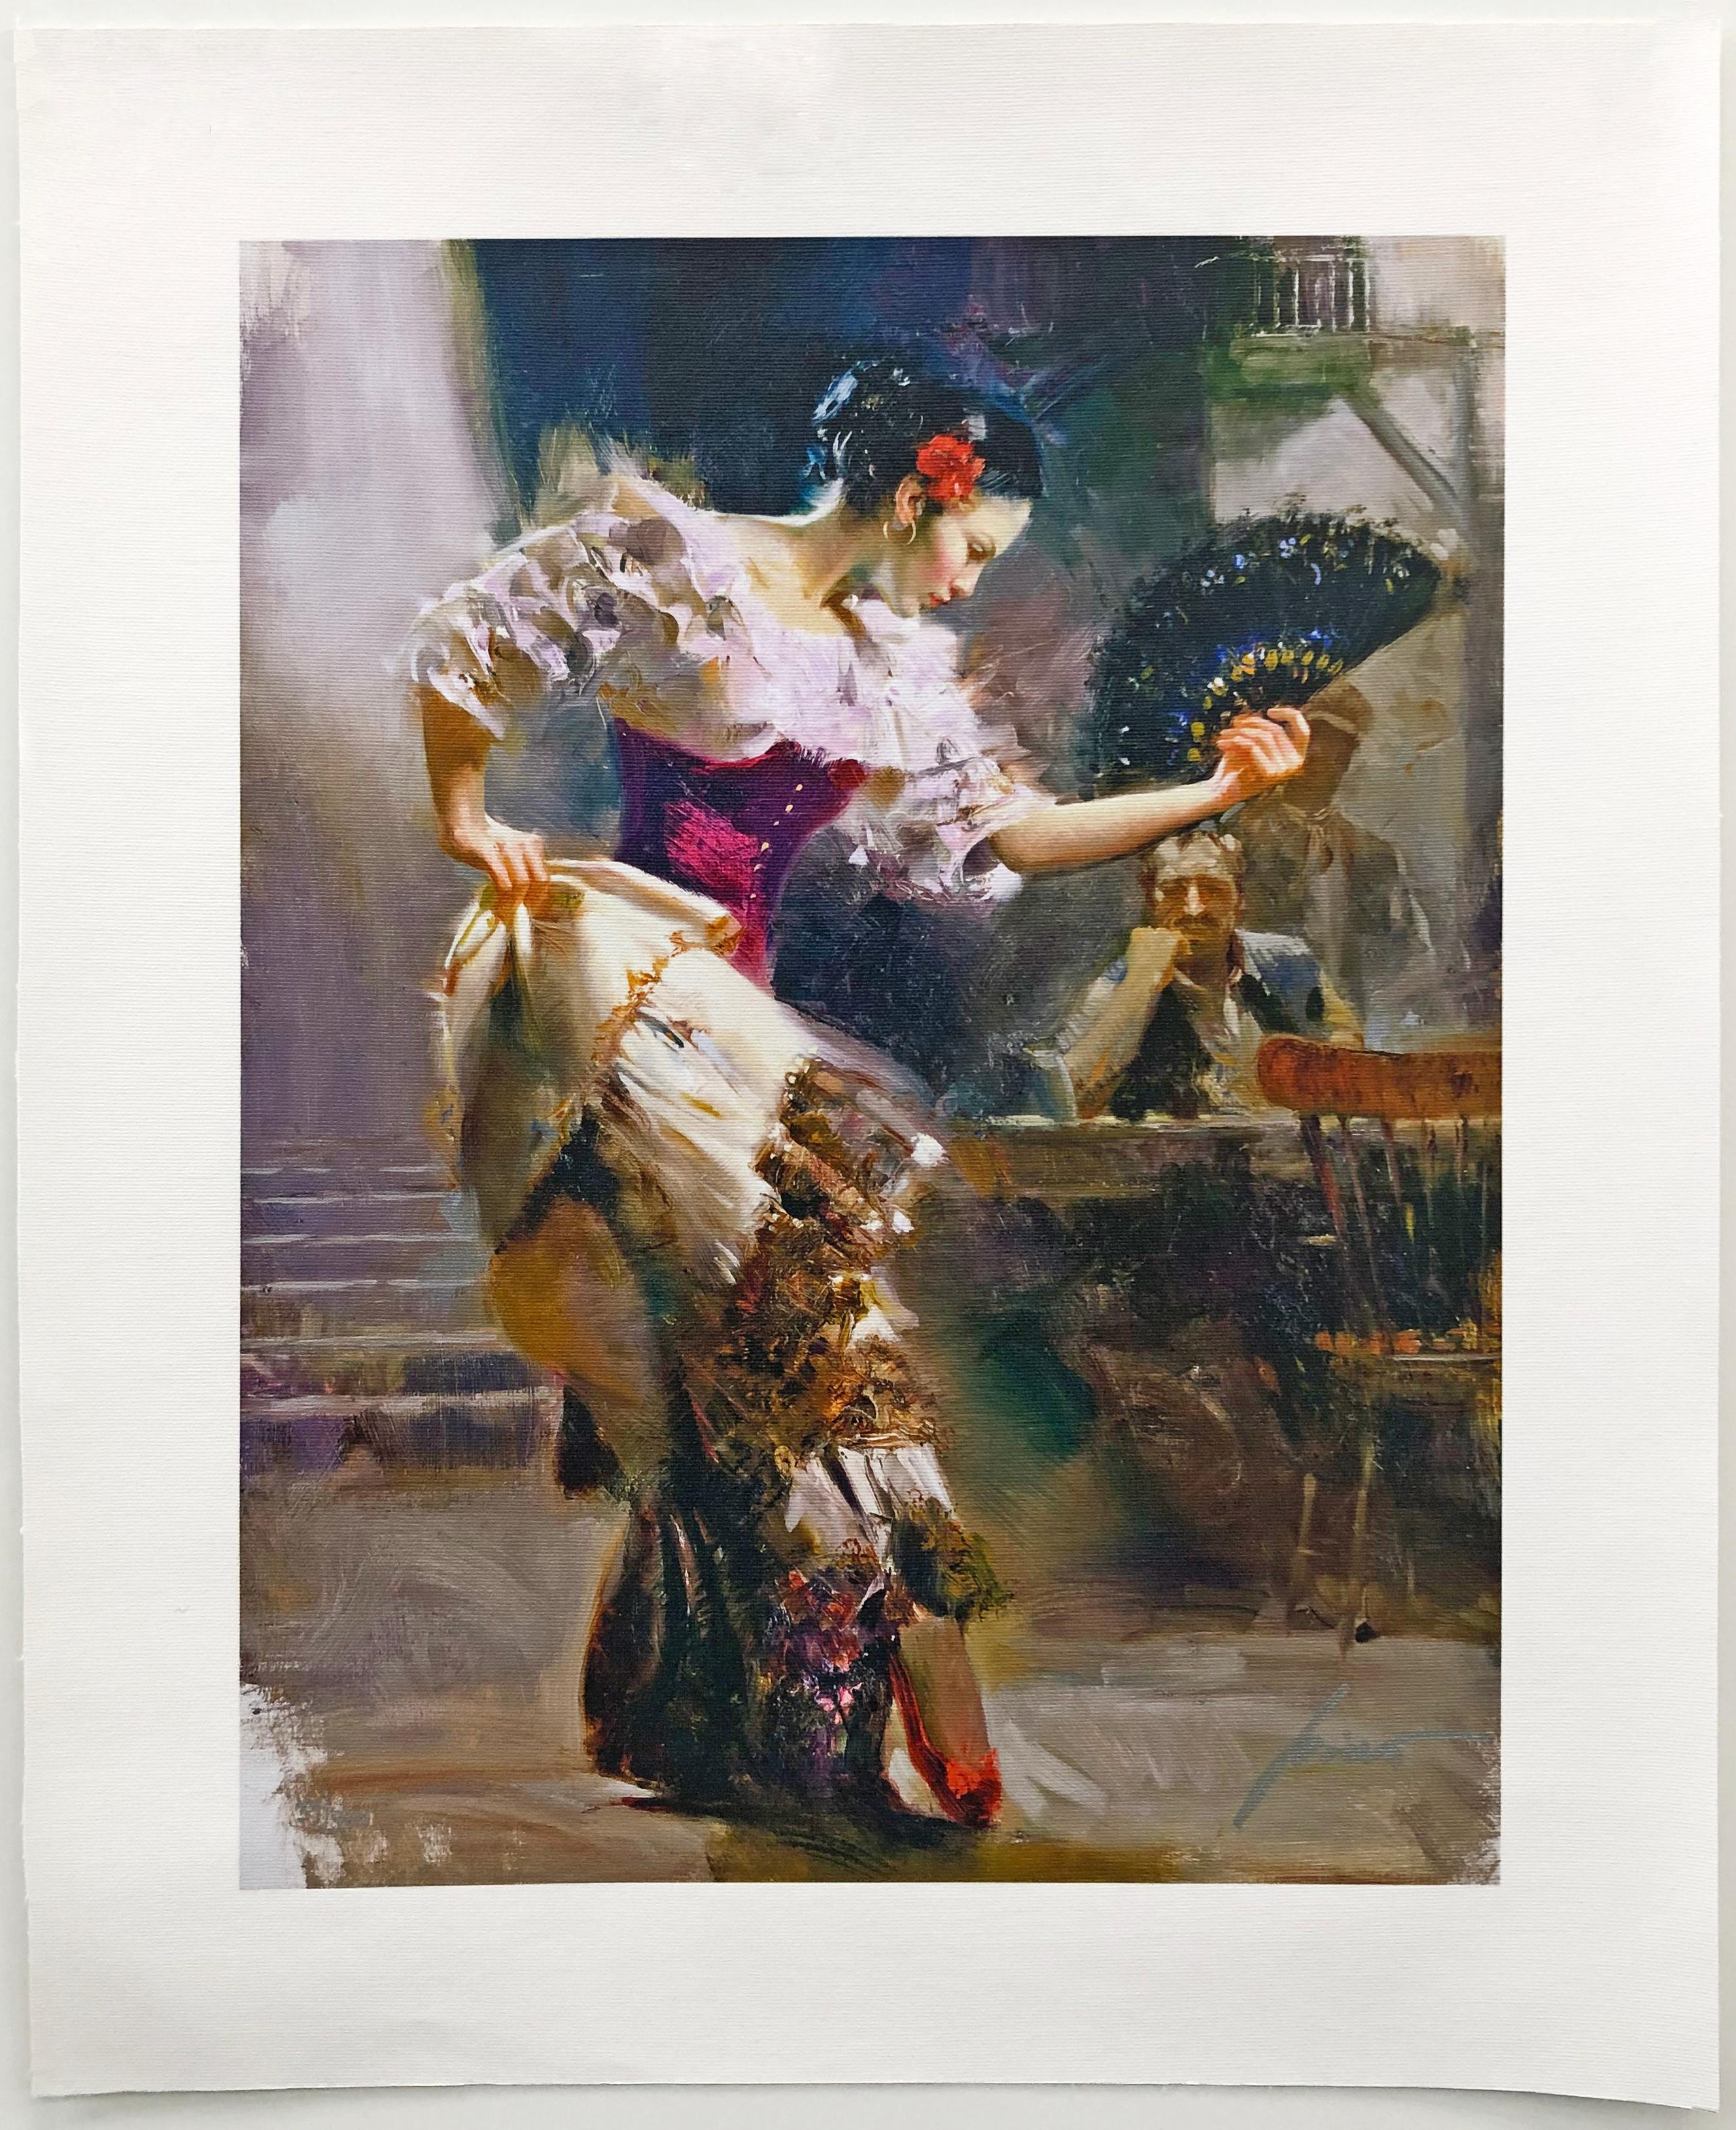 THE DANCER - Print by Pino Daeni